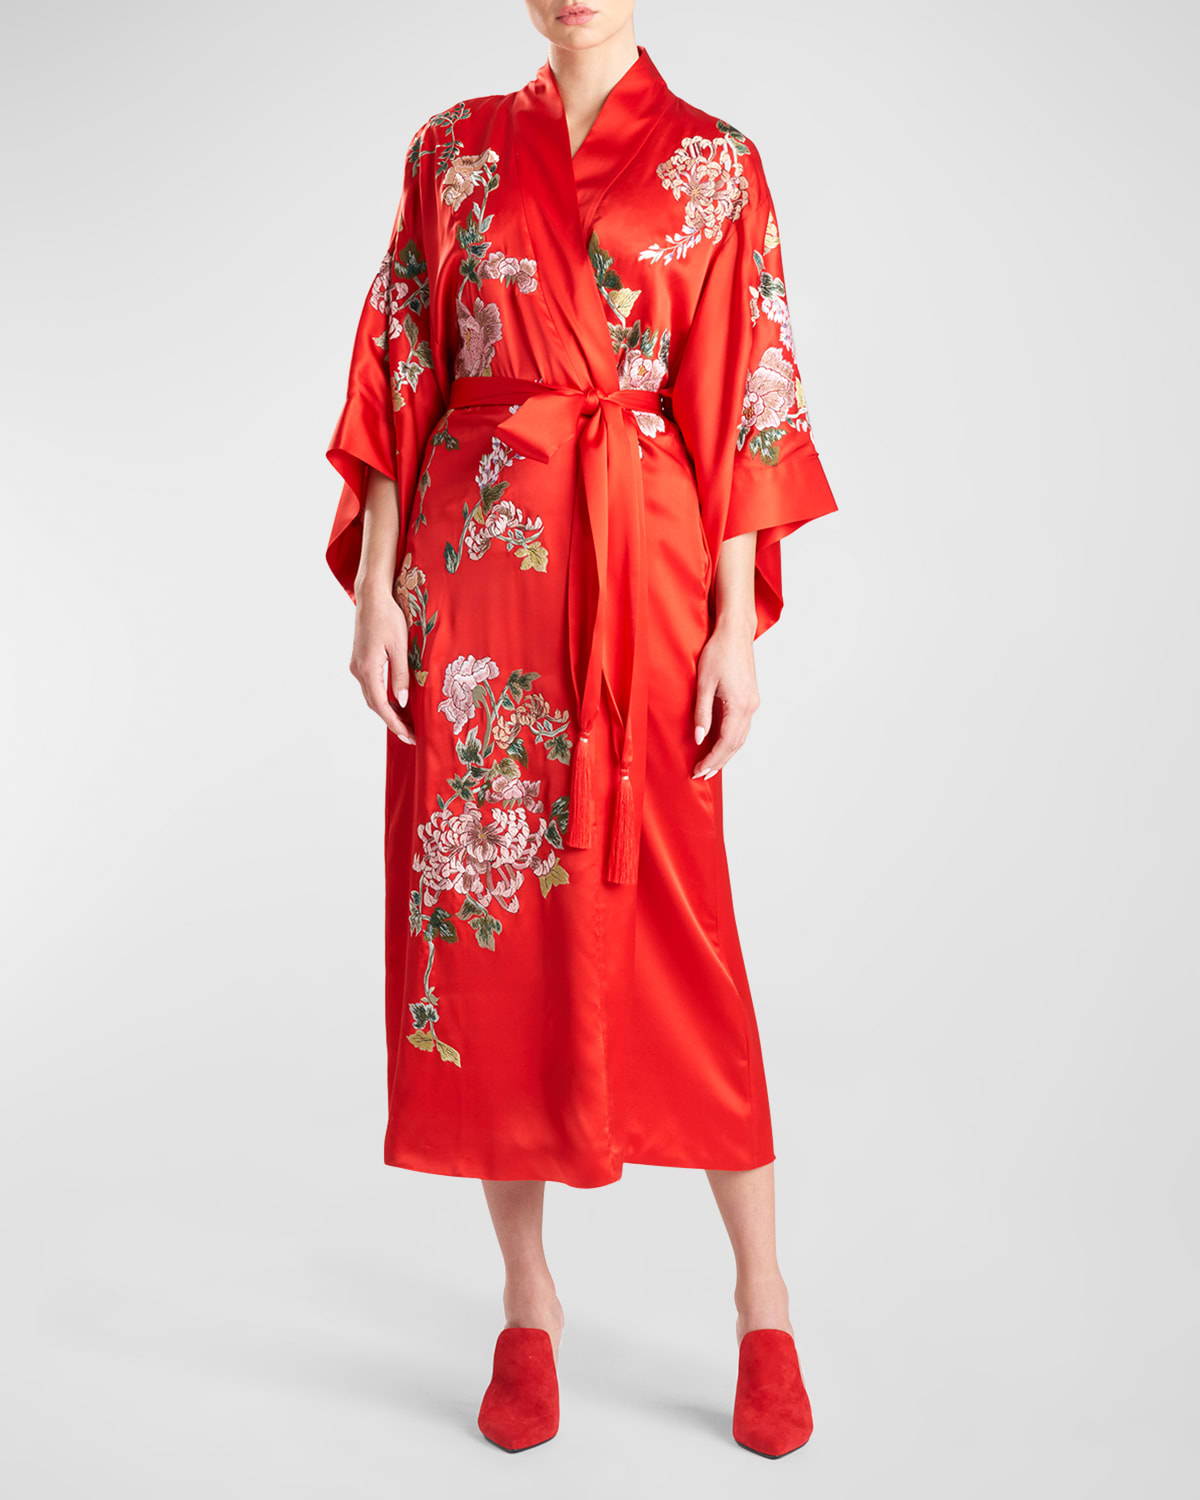 Josie Natori Kairaku Floral-Embroidered Silk Robe